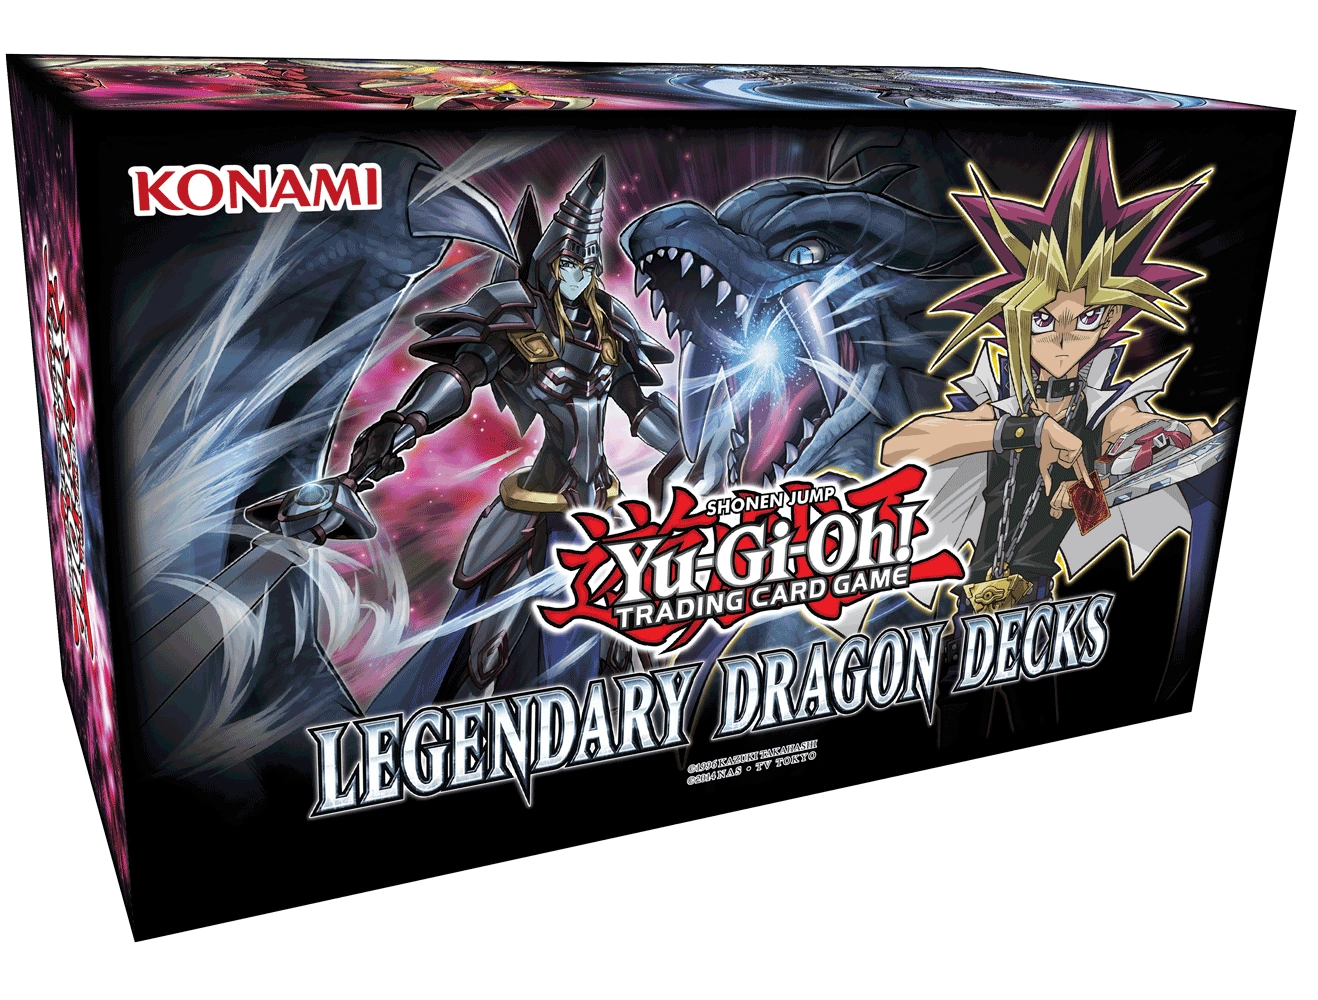 Yu-Gi-Oh! - Legendary Dragon Decks - Unlimited Reprint